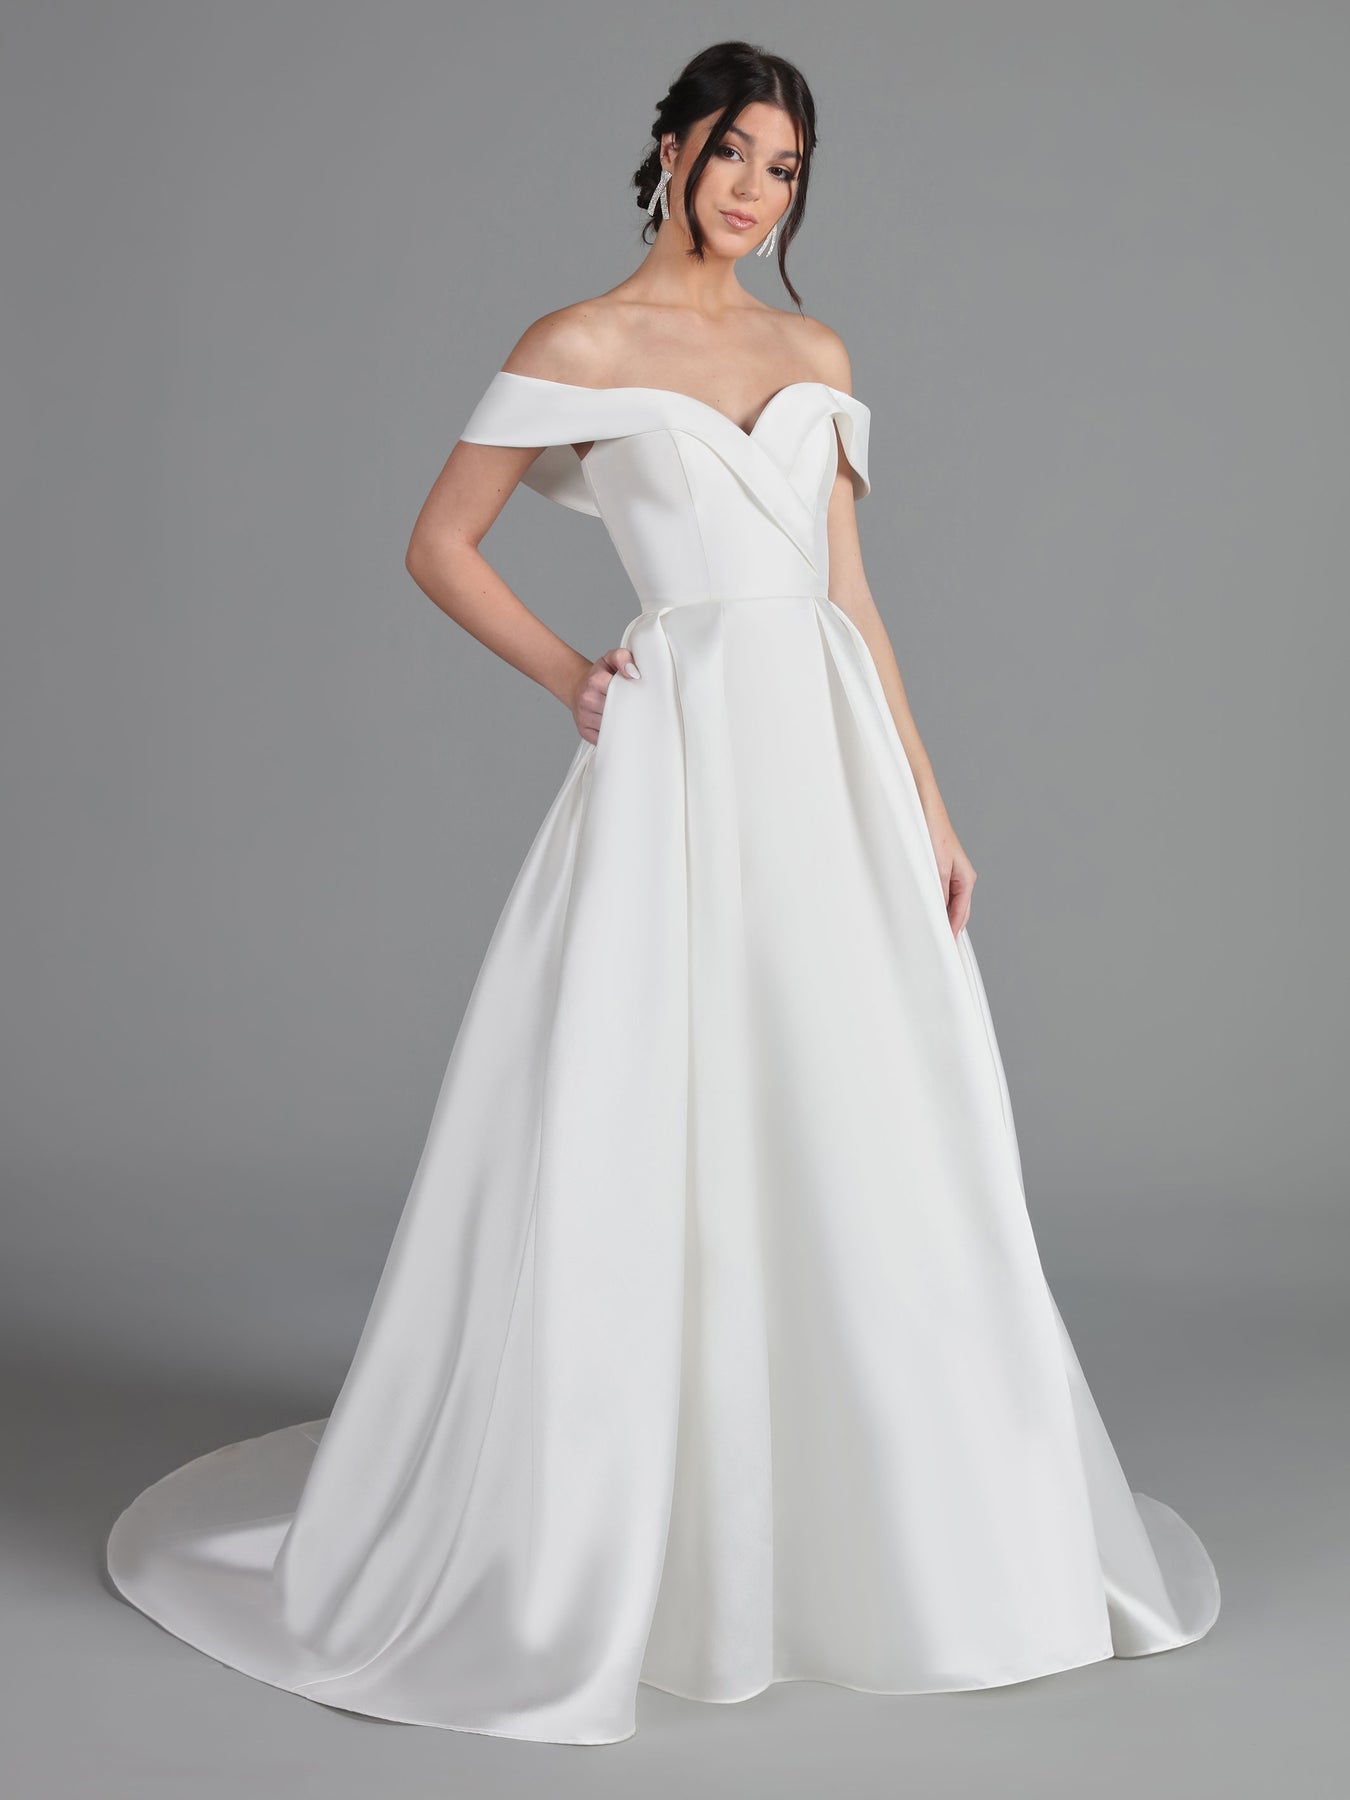 Bridal Wedding Gowns, Bridesmaid Dresses | Avery Austin